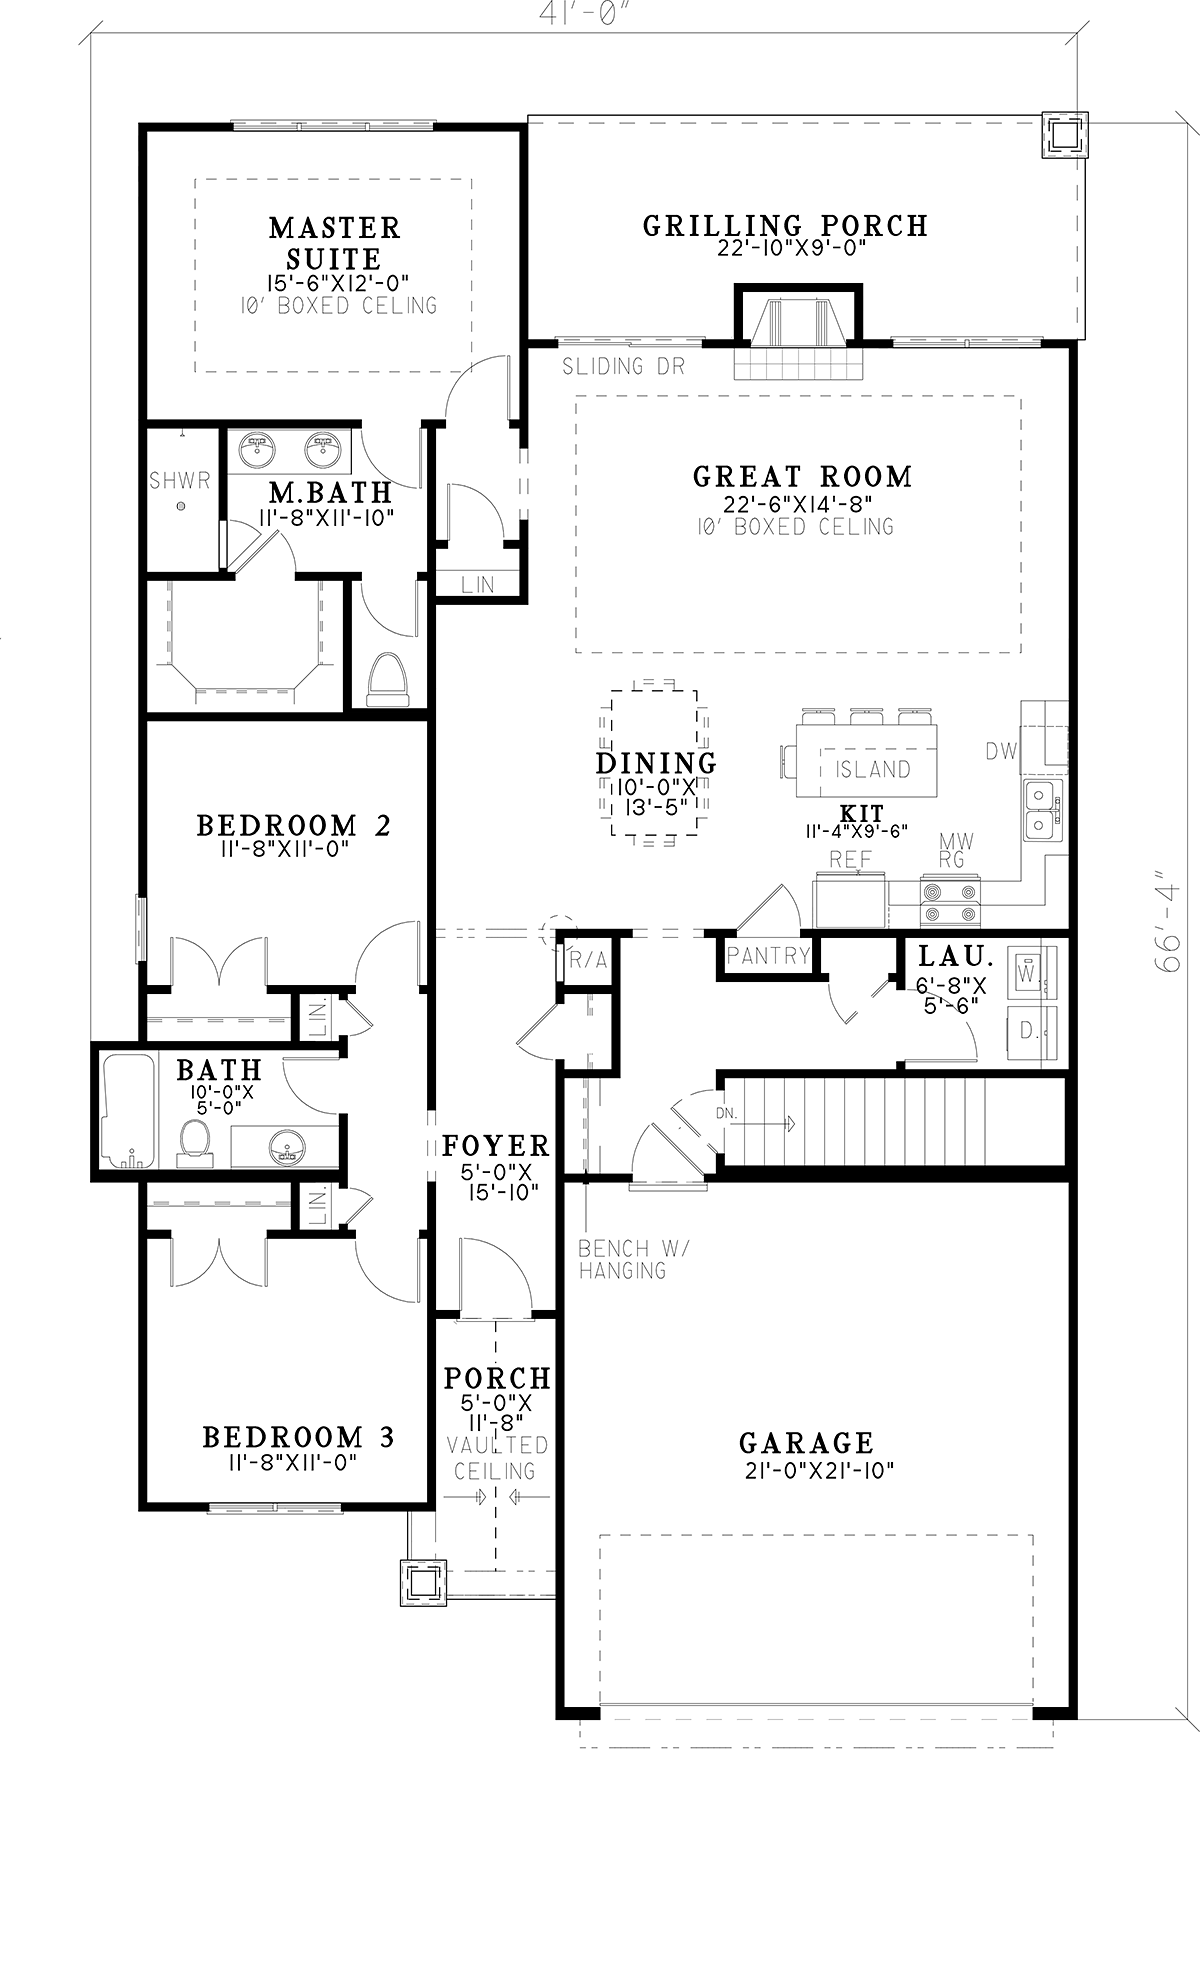 House Plan 82652 Alternate Level One